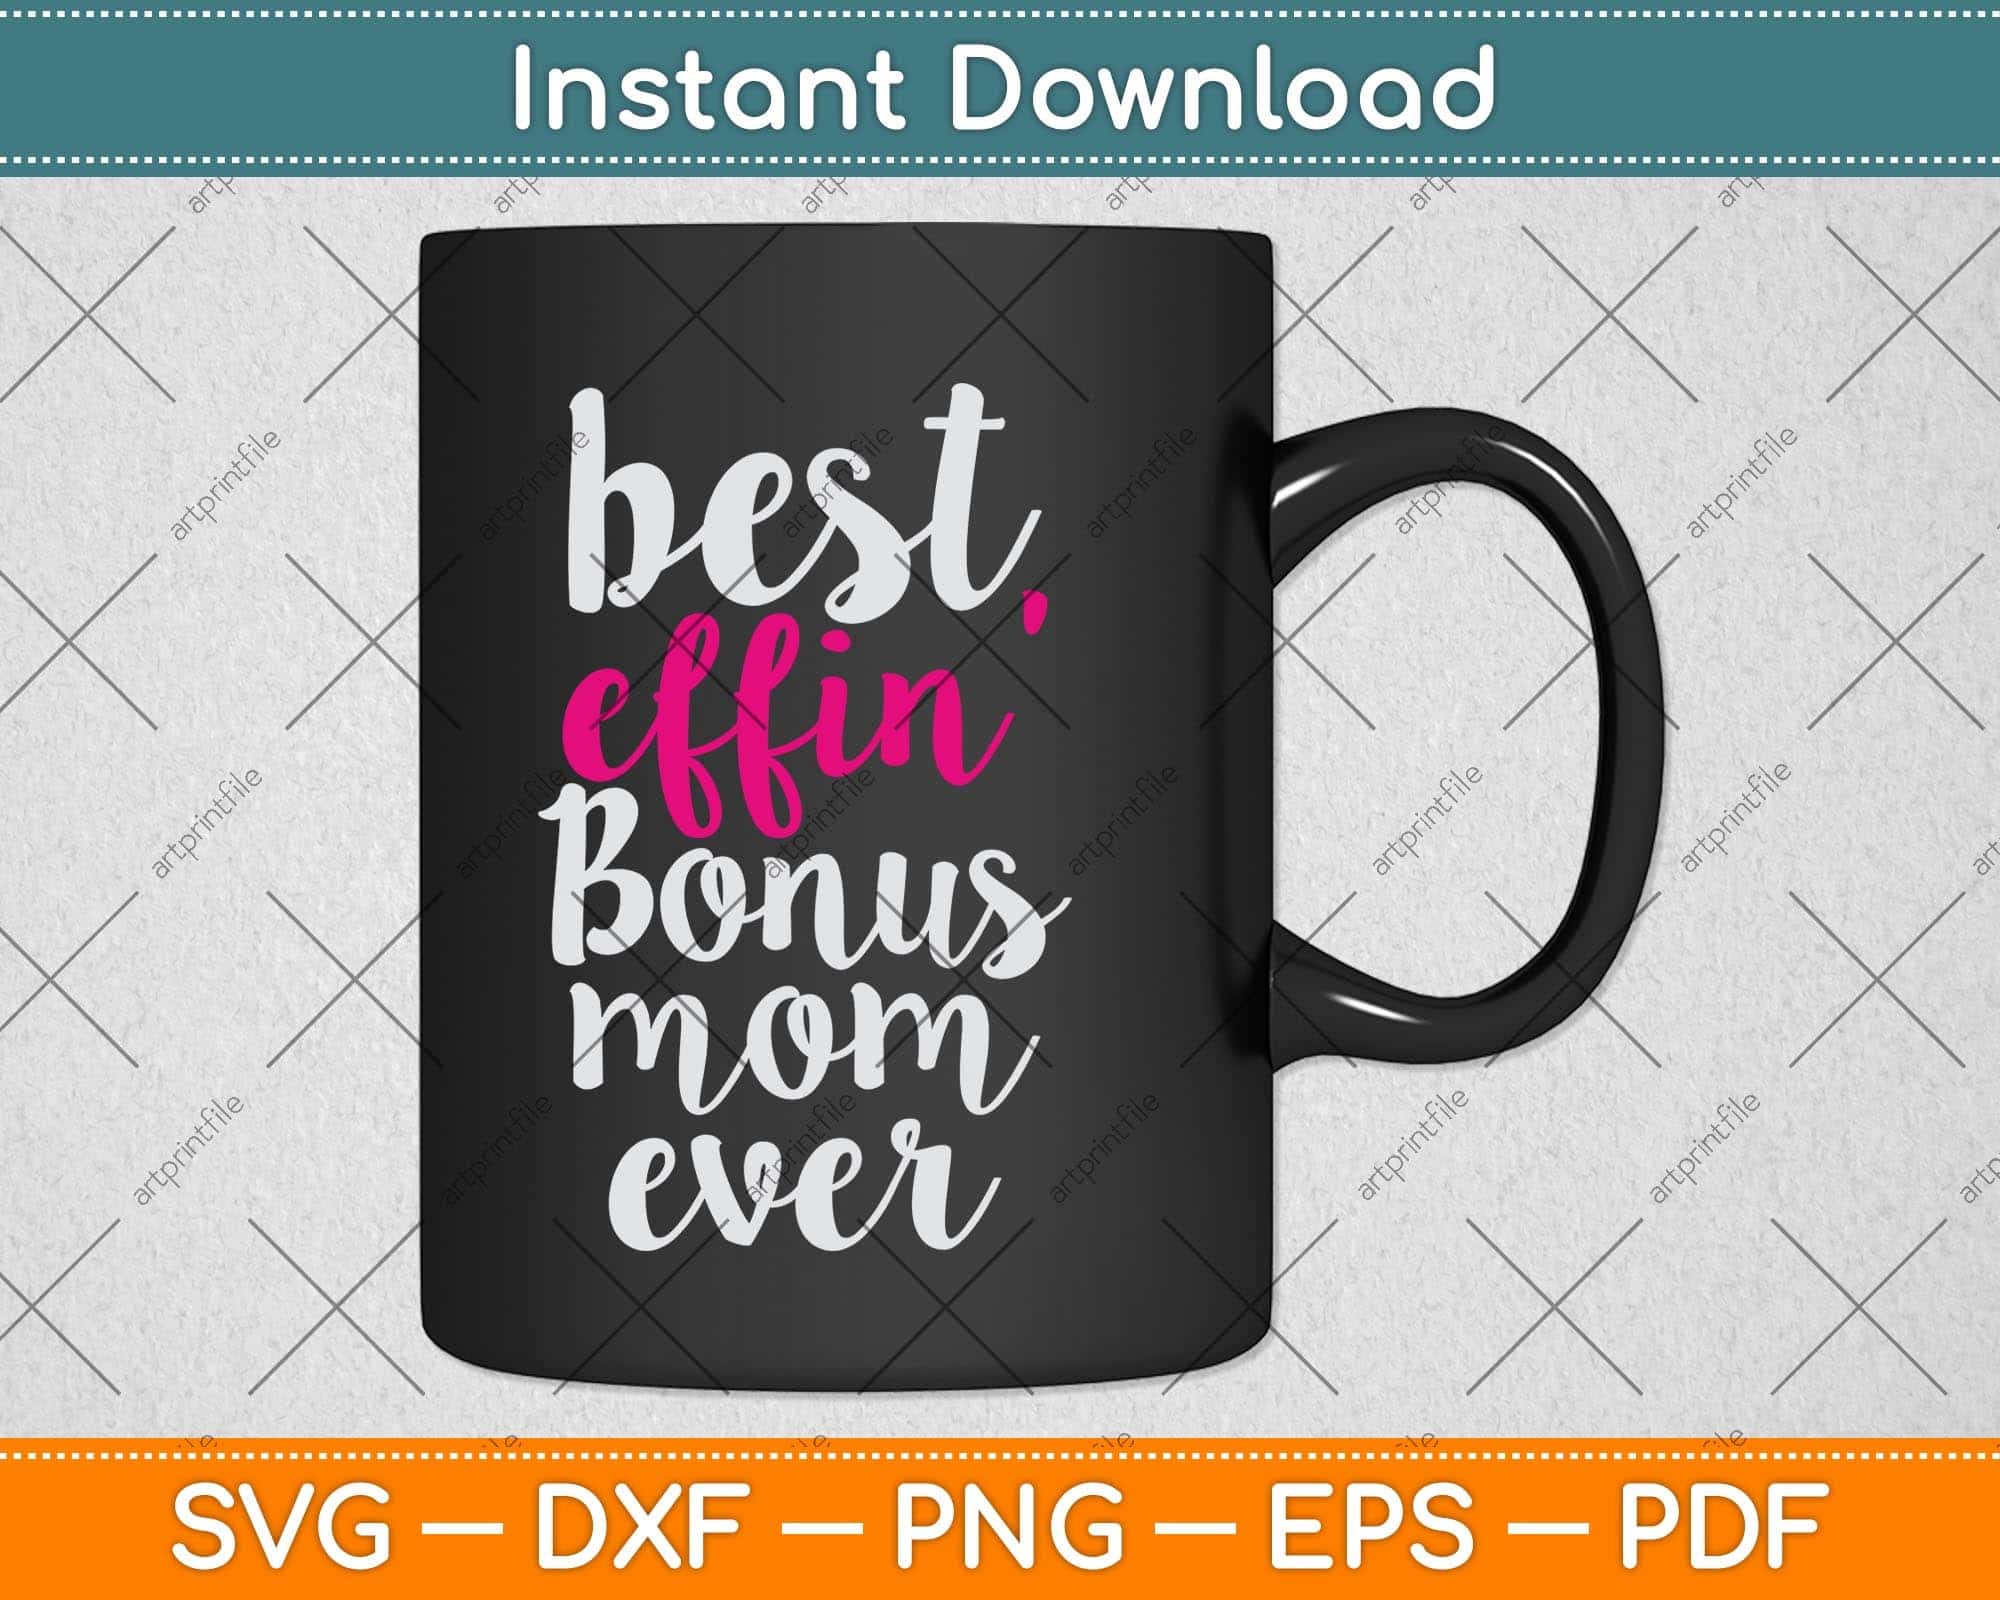 Best Bonus Mom Ever